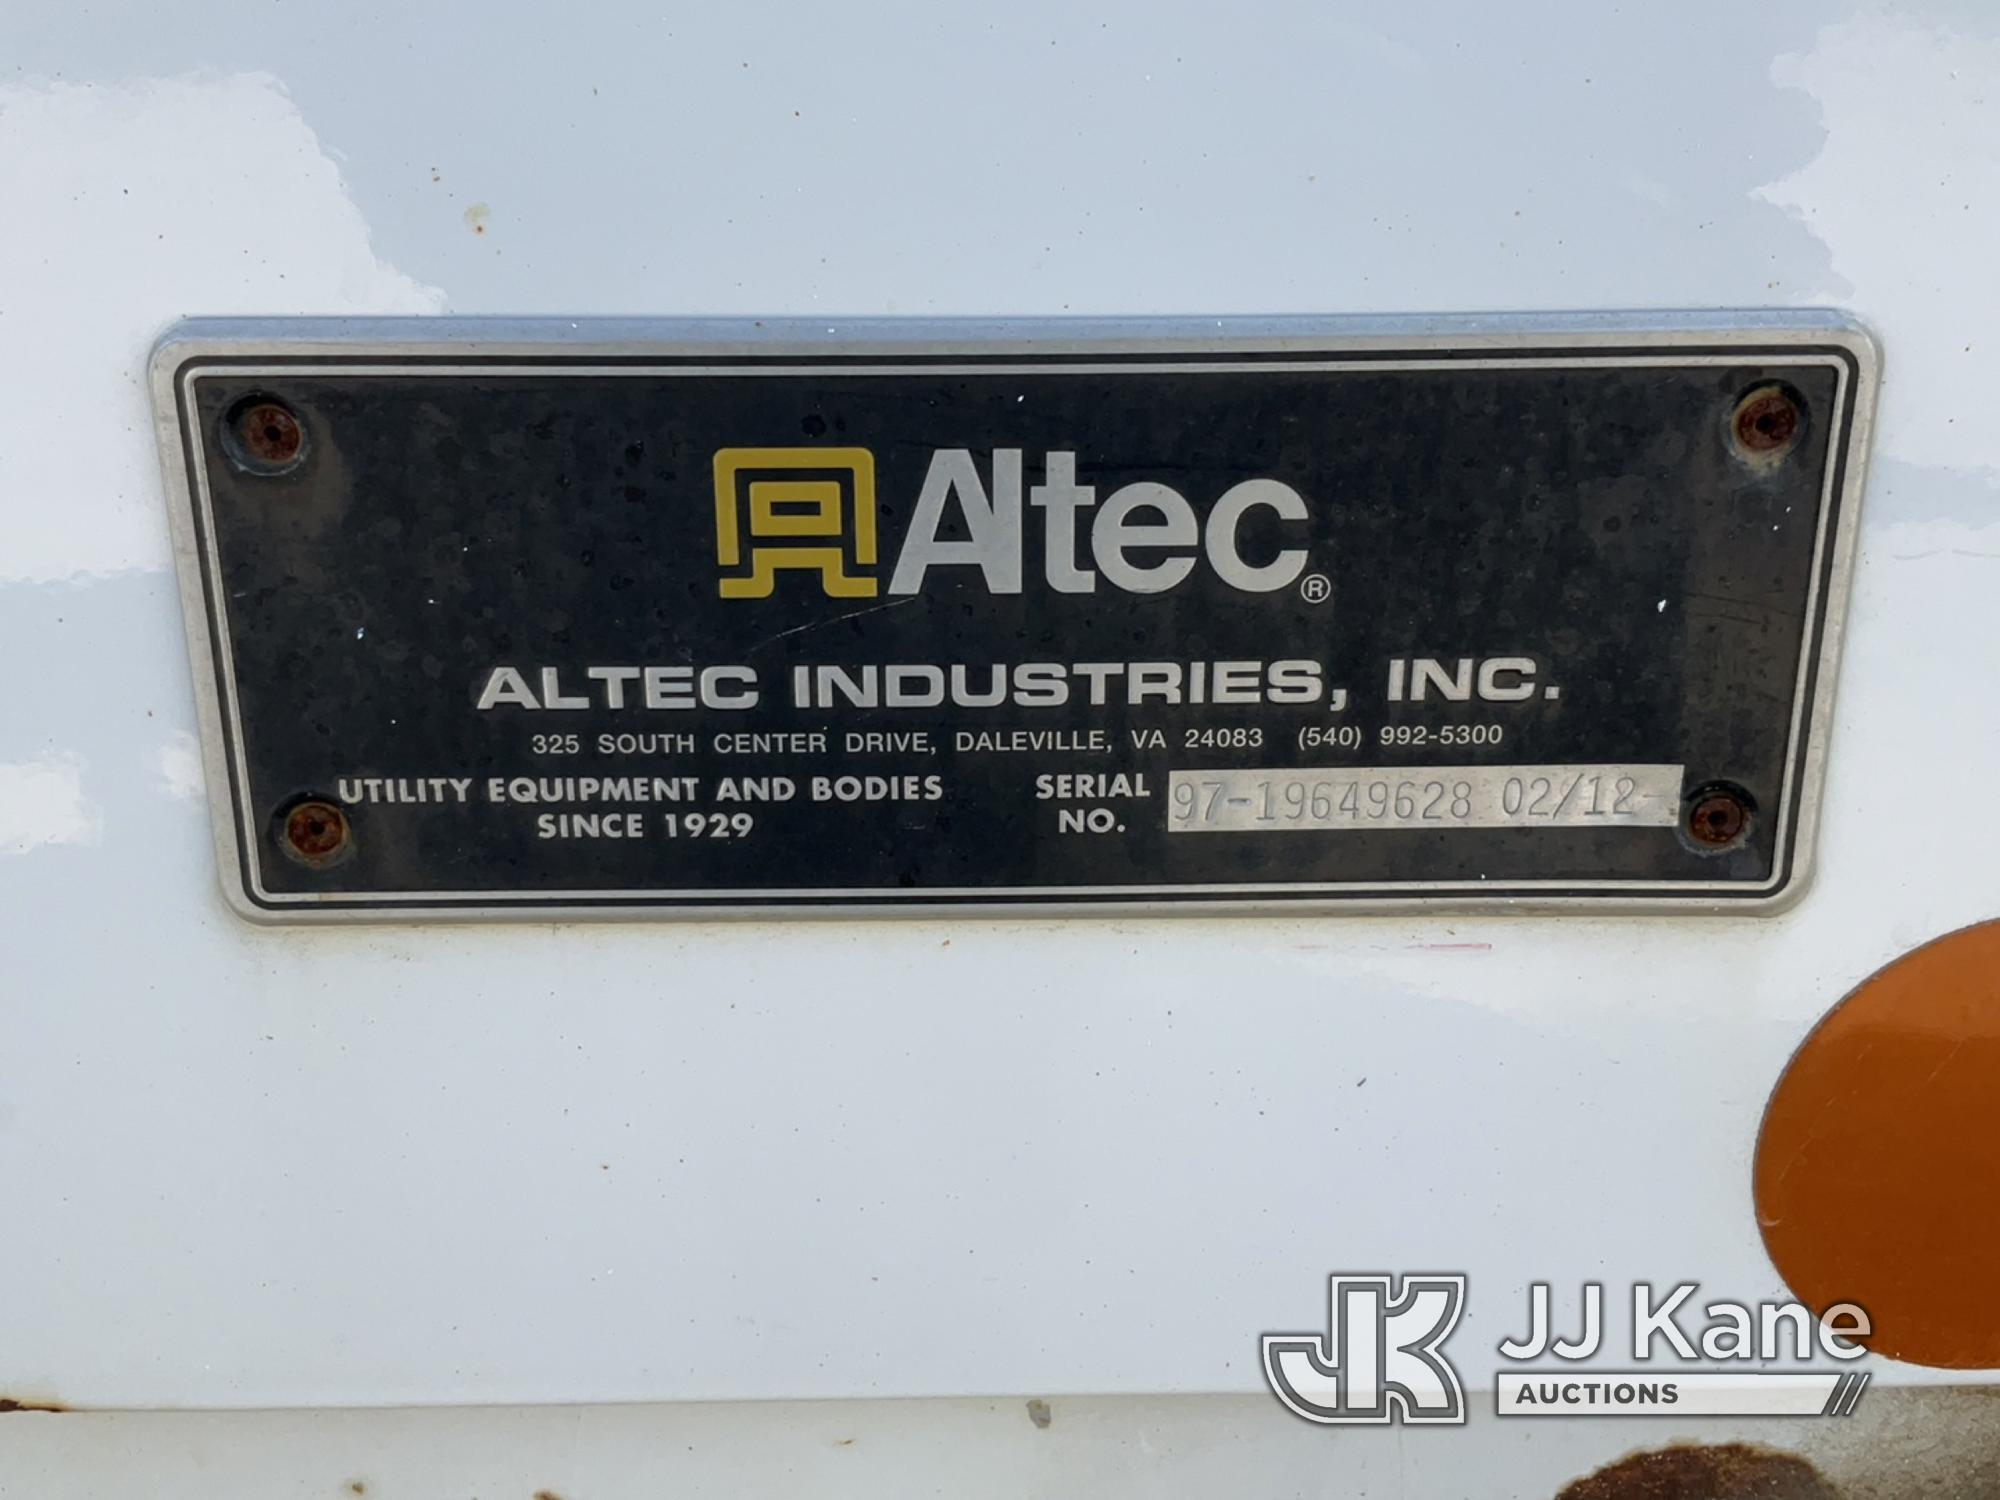 (Des Moines, IA) Altec D4065A-TR, Digger Derrick rear mounted on 2012 International 7400 6x6 Flatbed